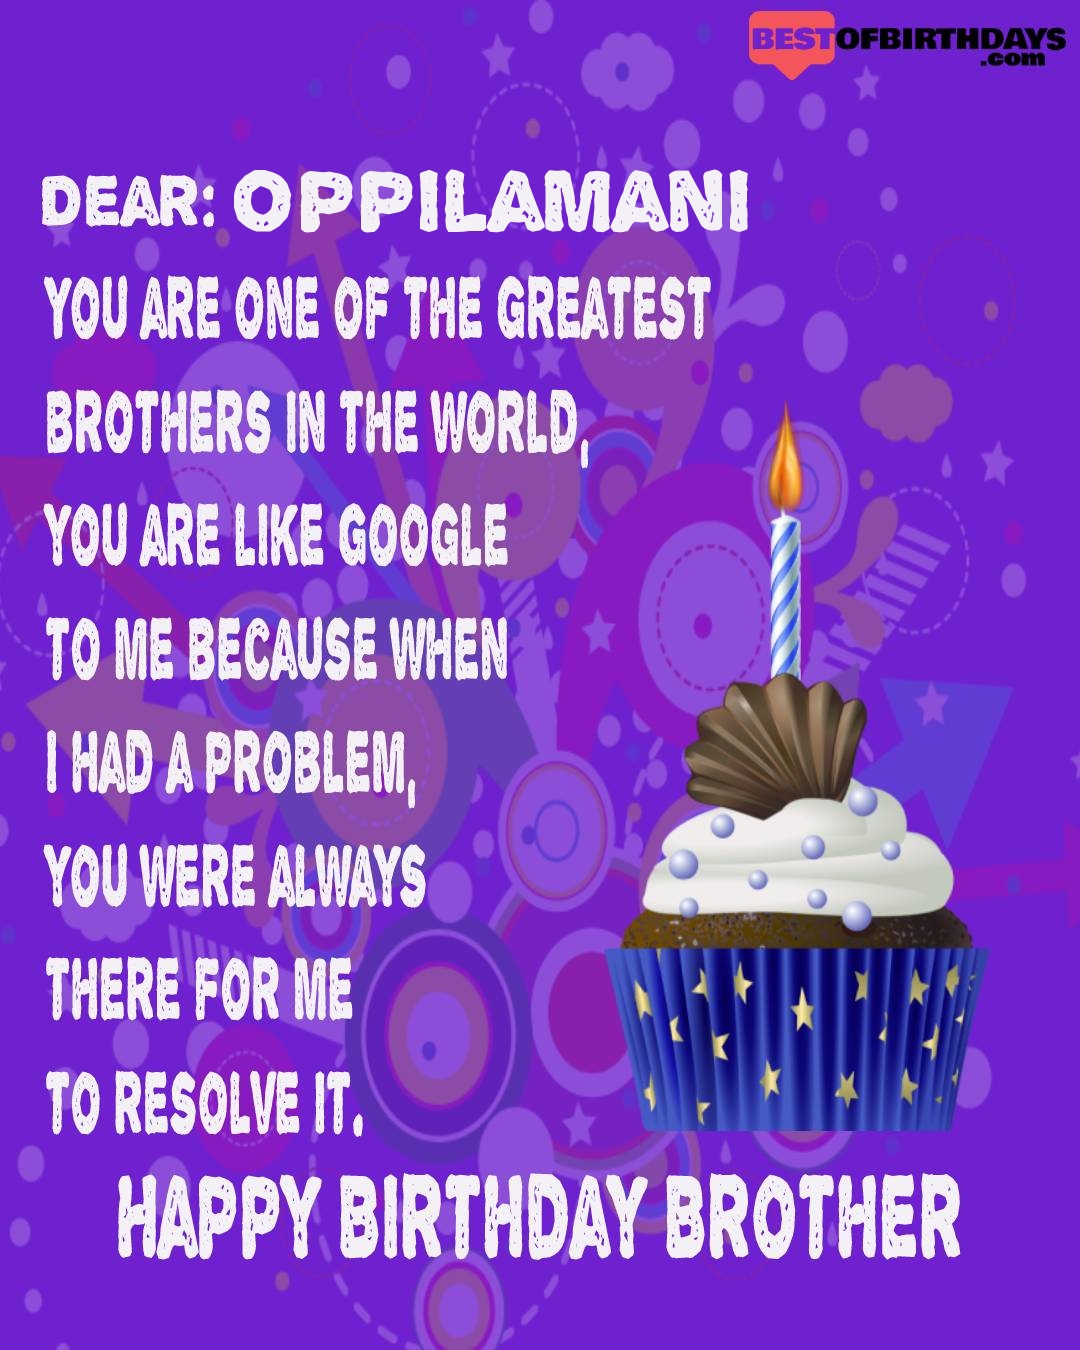 Happy birthday oppilamani bhai brother bro